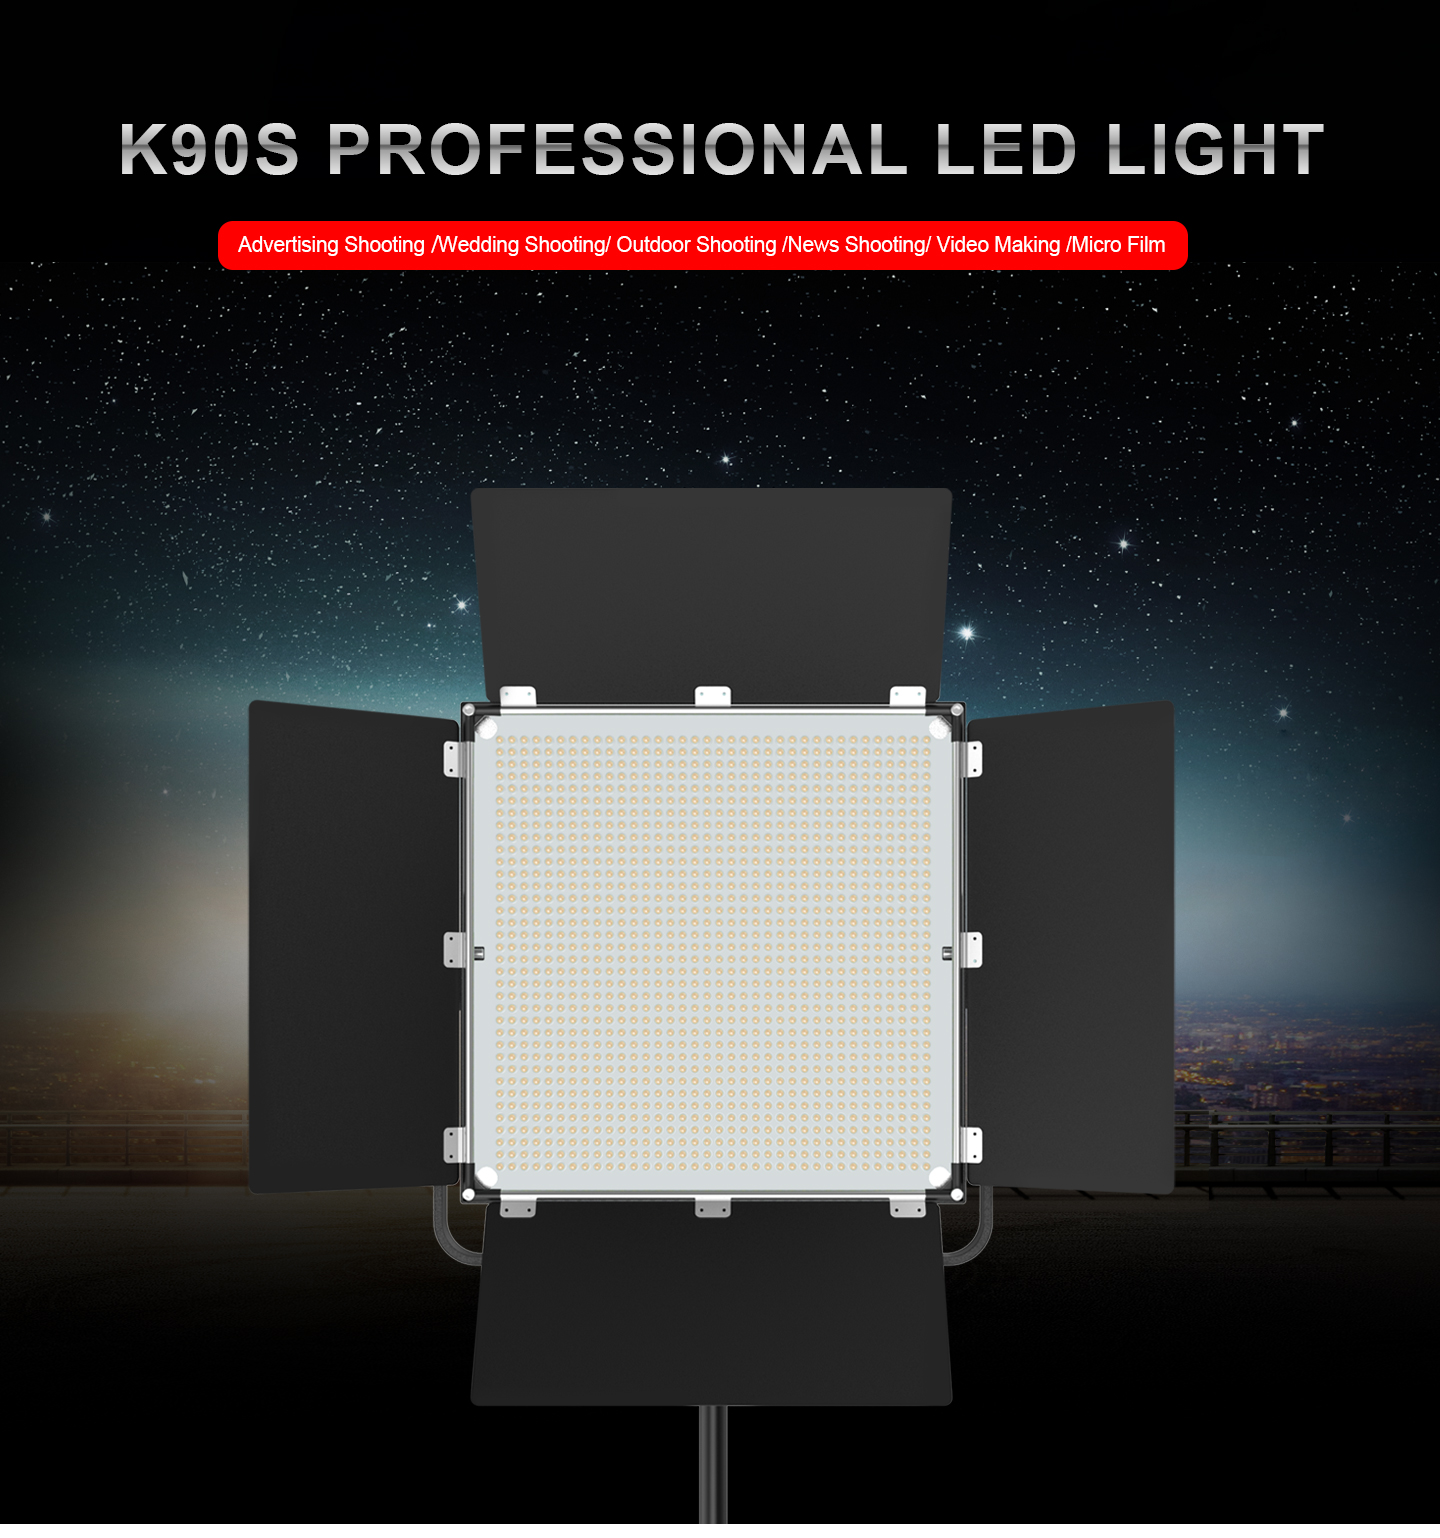 K90S PROFESSIONAL LED LIGHT